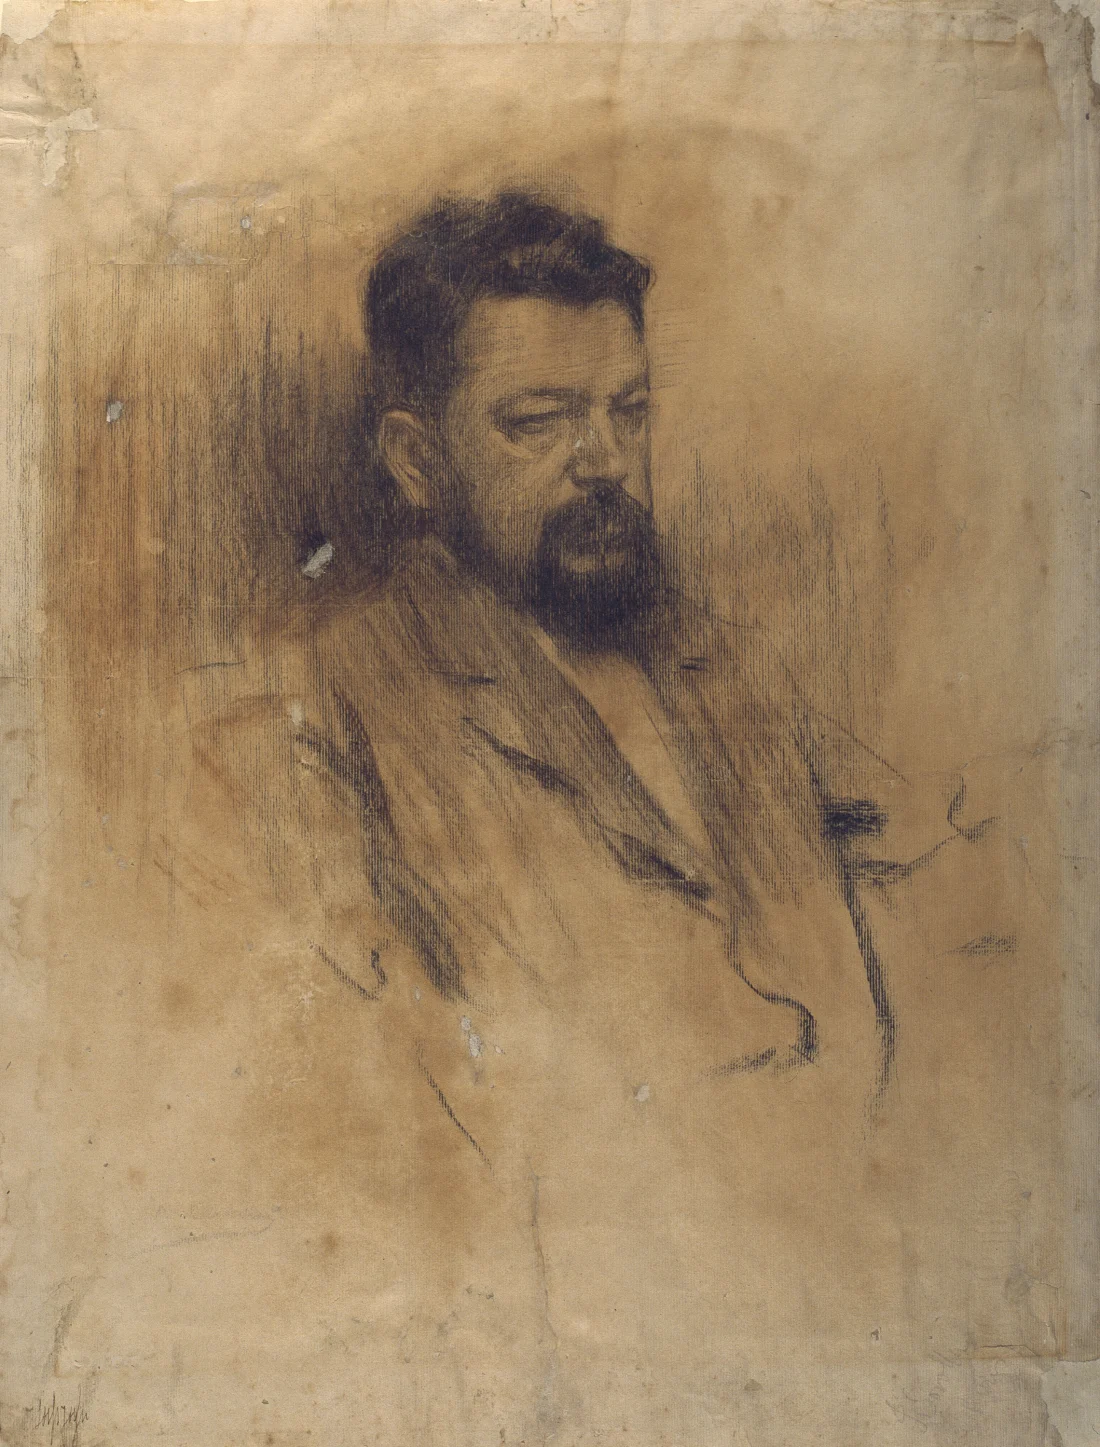 sepia-toned sketch, a profile portrait of a man